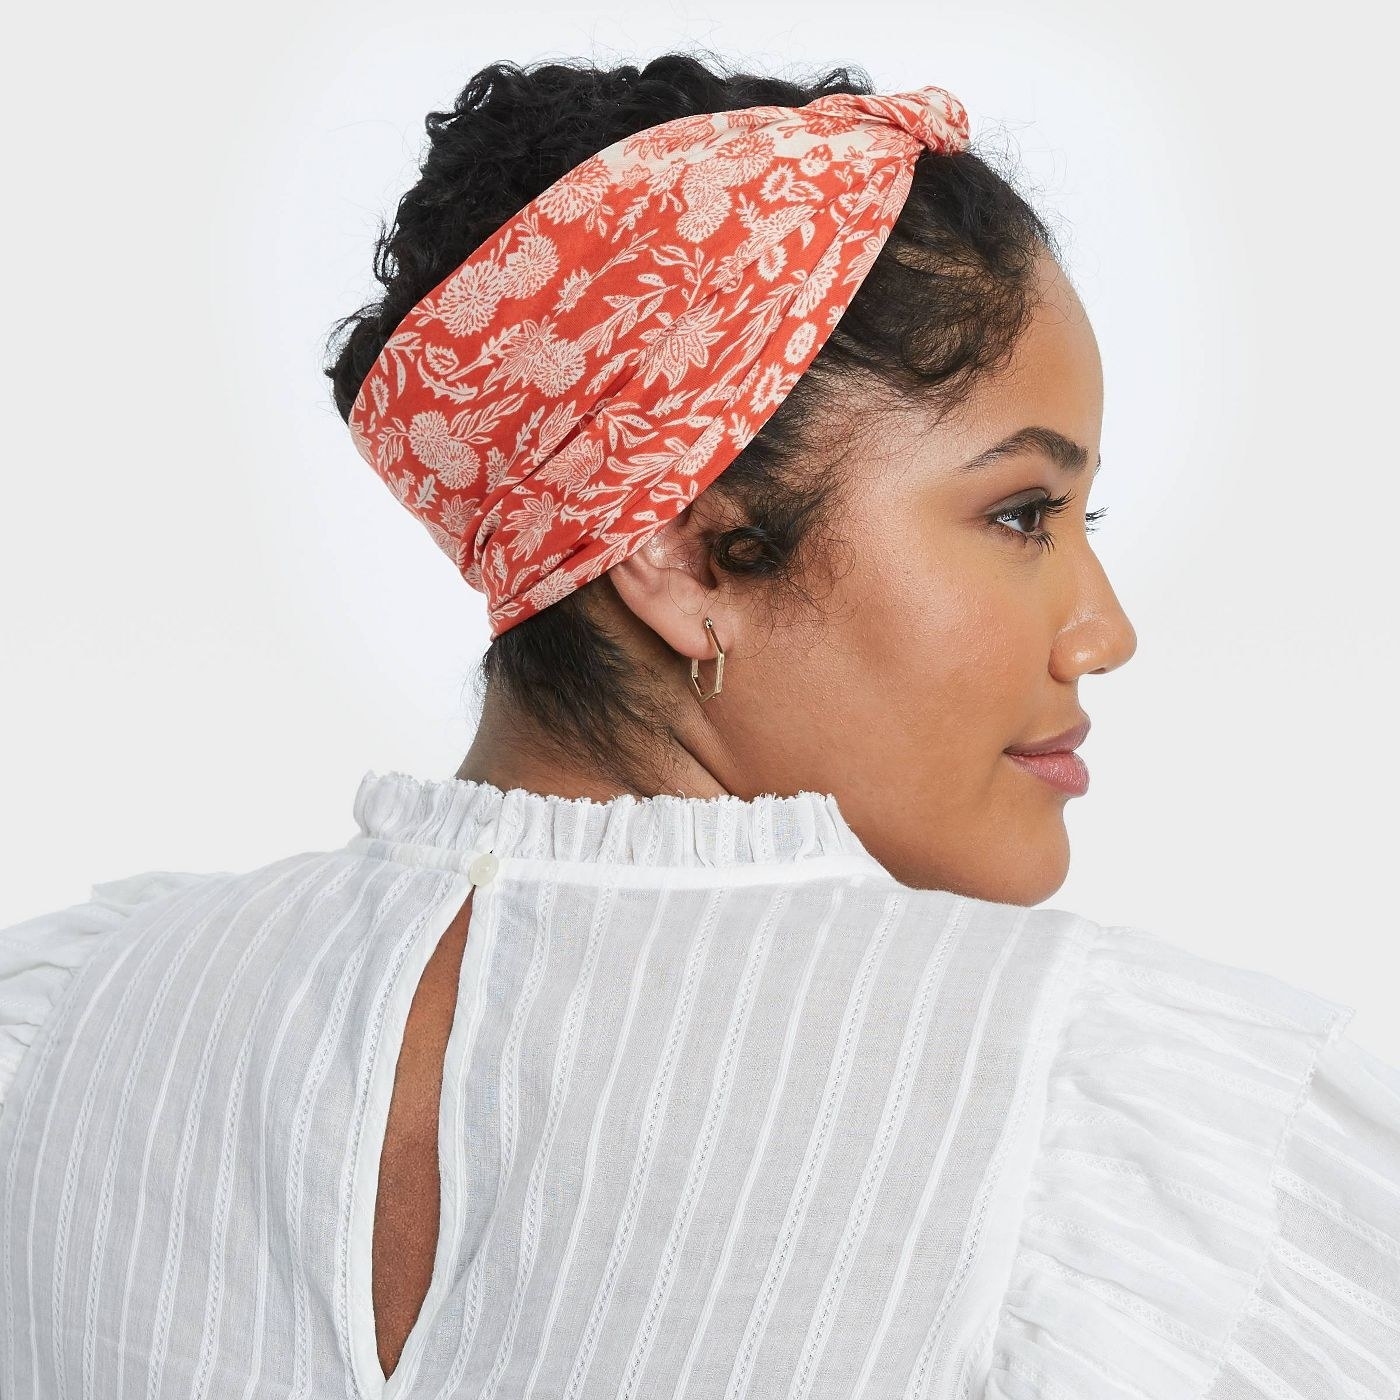 model wearing bandana on her head on handband